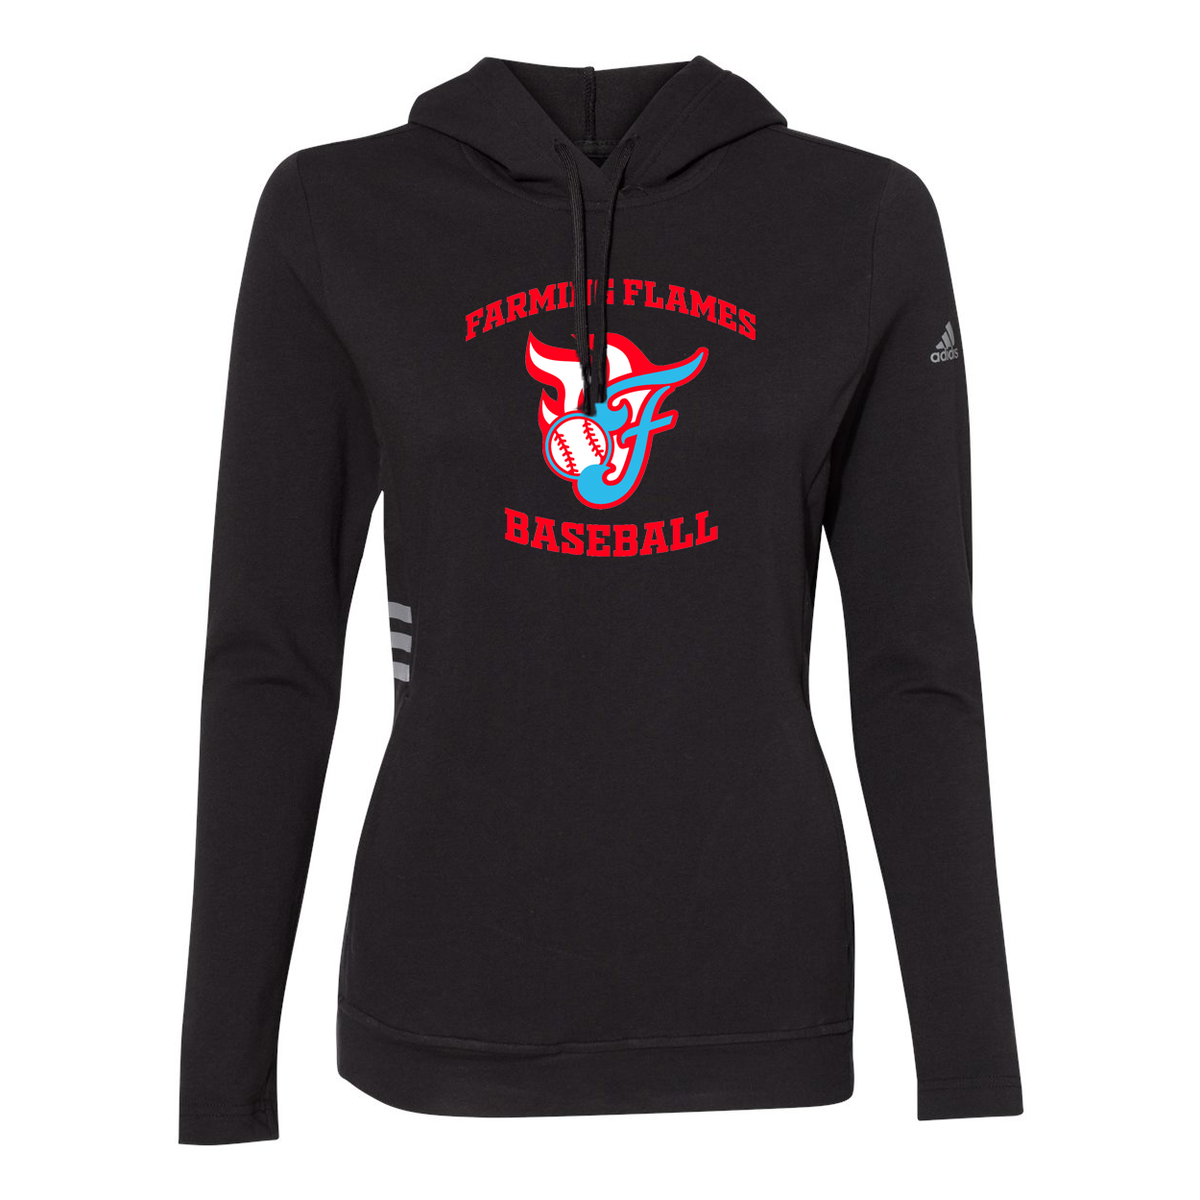 Farming Flames Baseball Club Adidas Women's Lightweight Sweatshirt